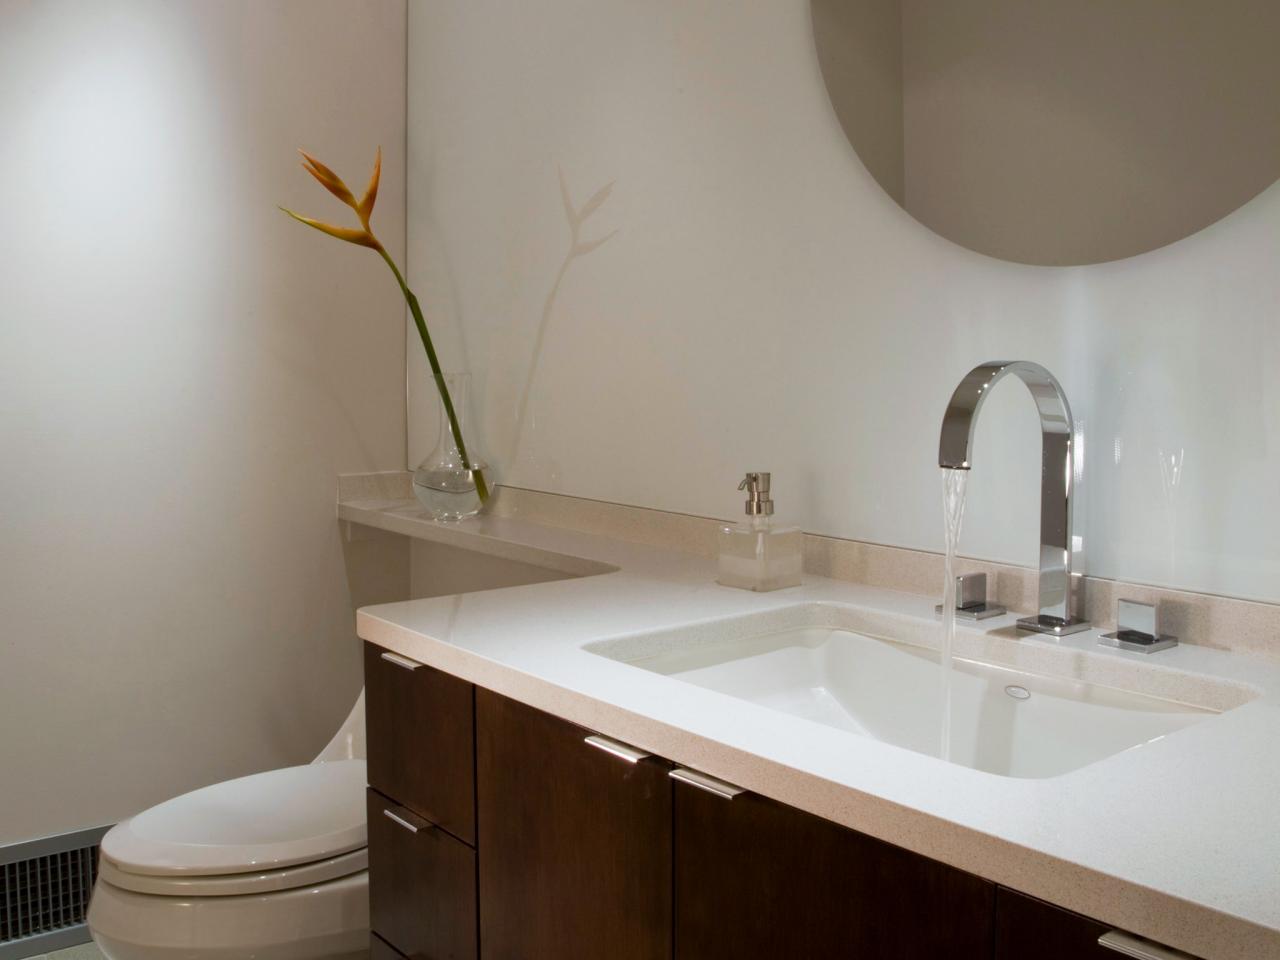 Solid Surface Bathroom Countertop, Corian Bathroom Countertops Pros And Cons